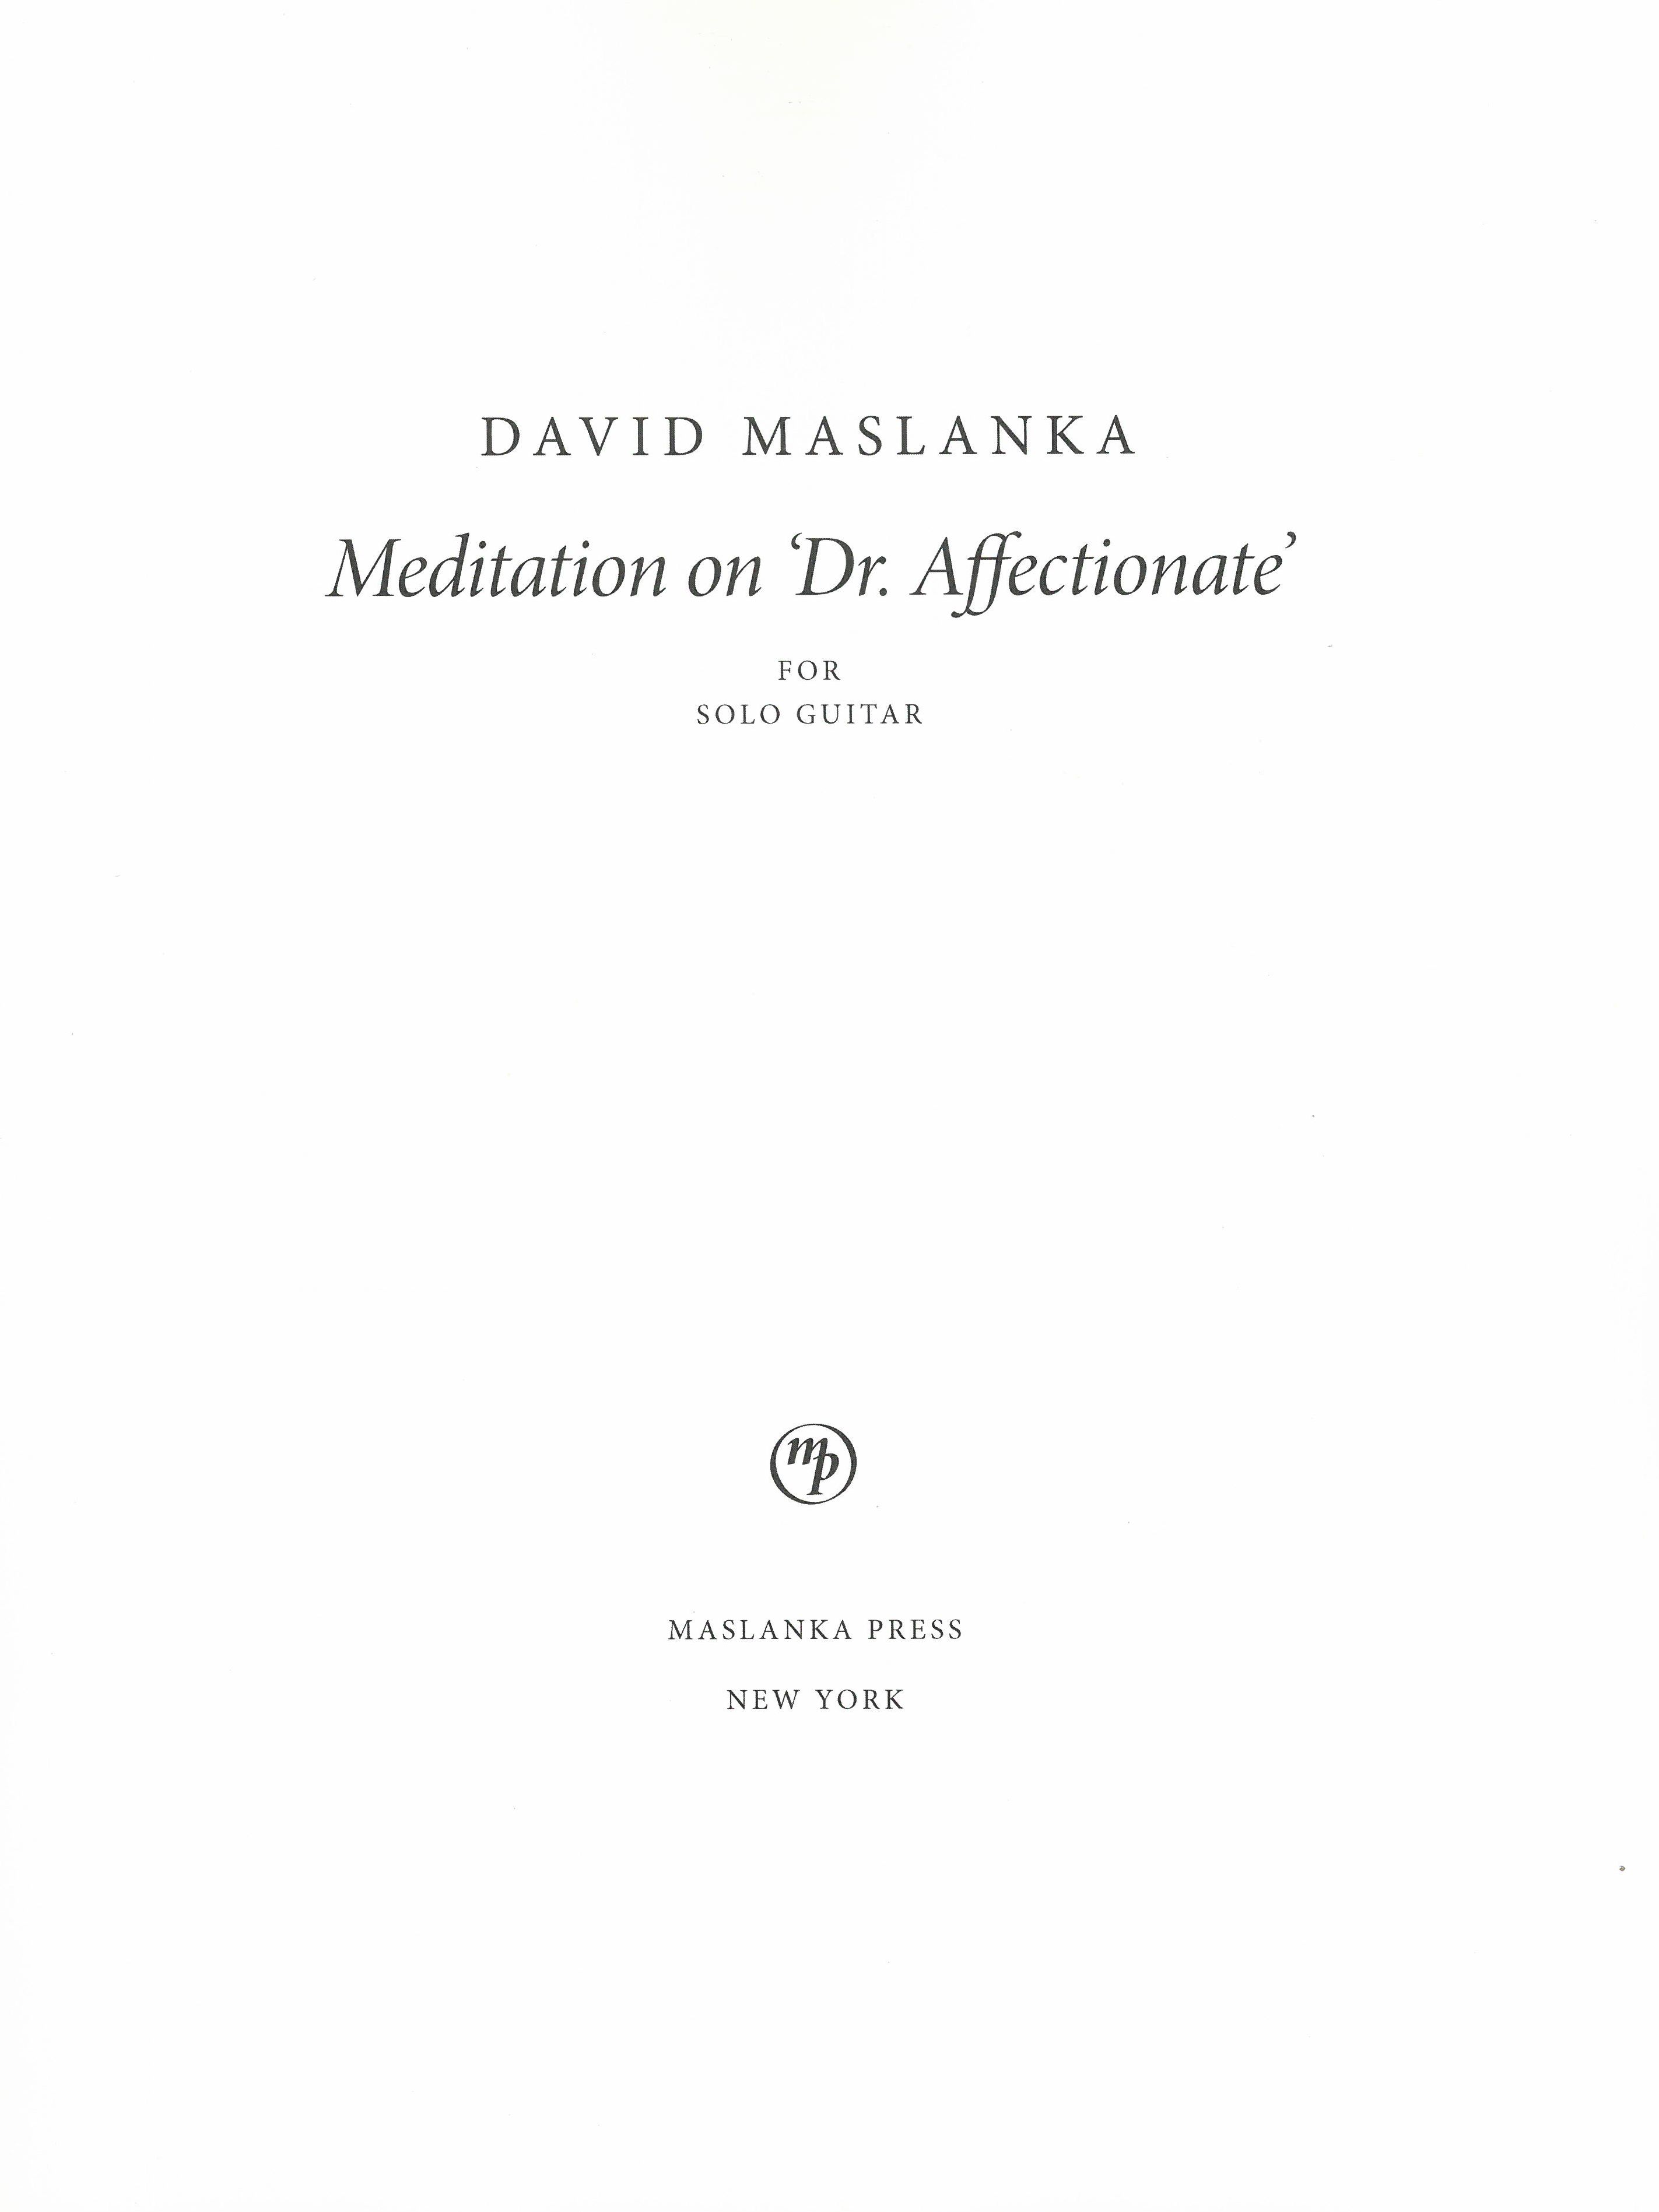 Meditation On Dr. Affectionate : For Solo Guitar (1981).